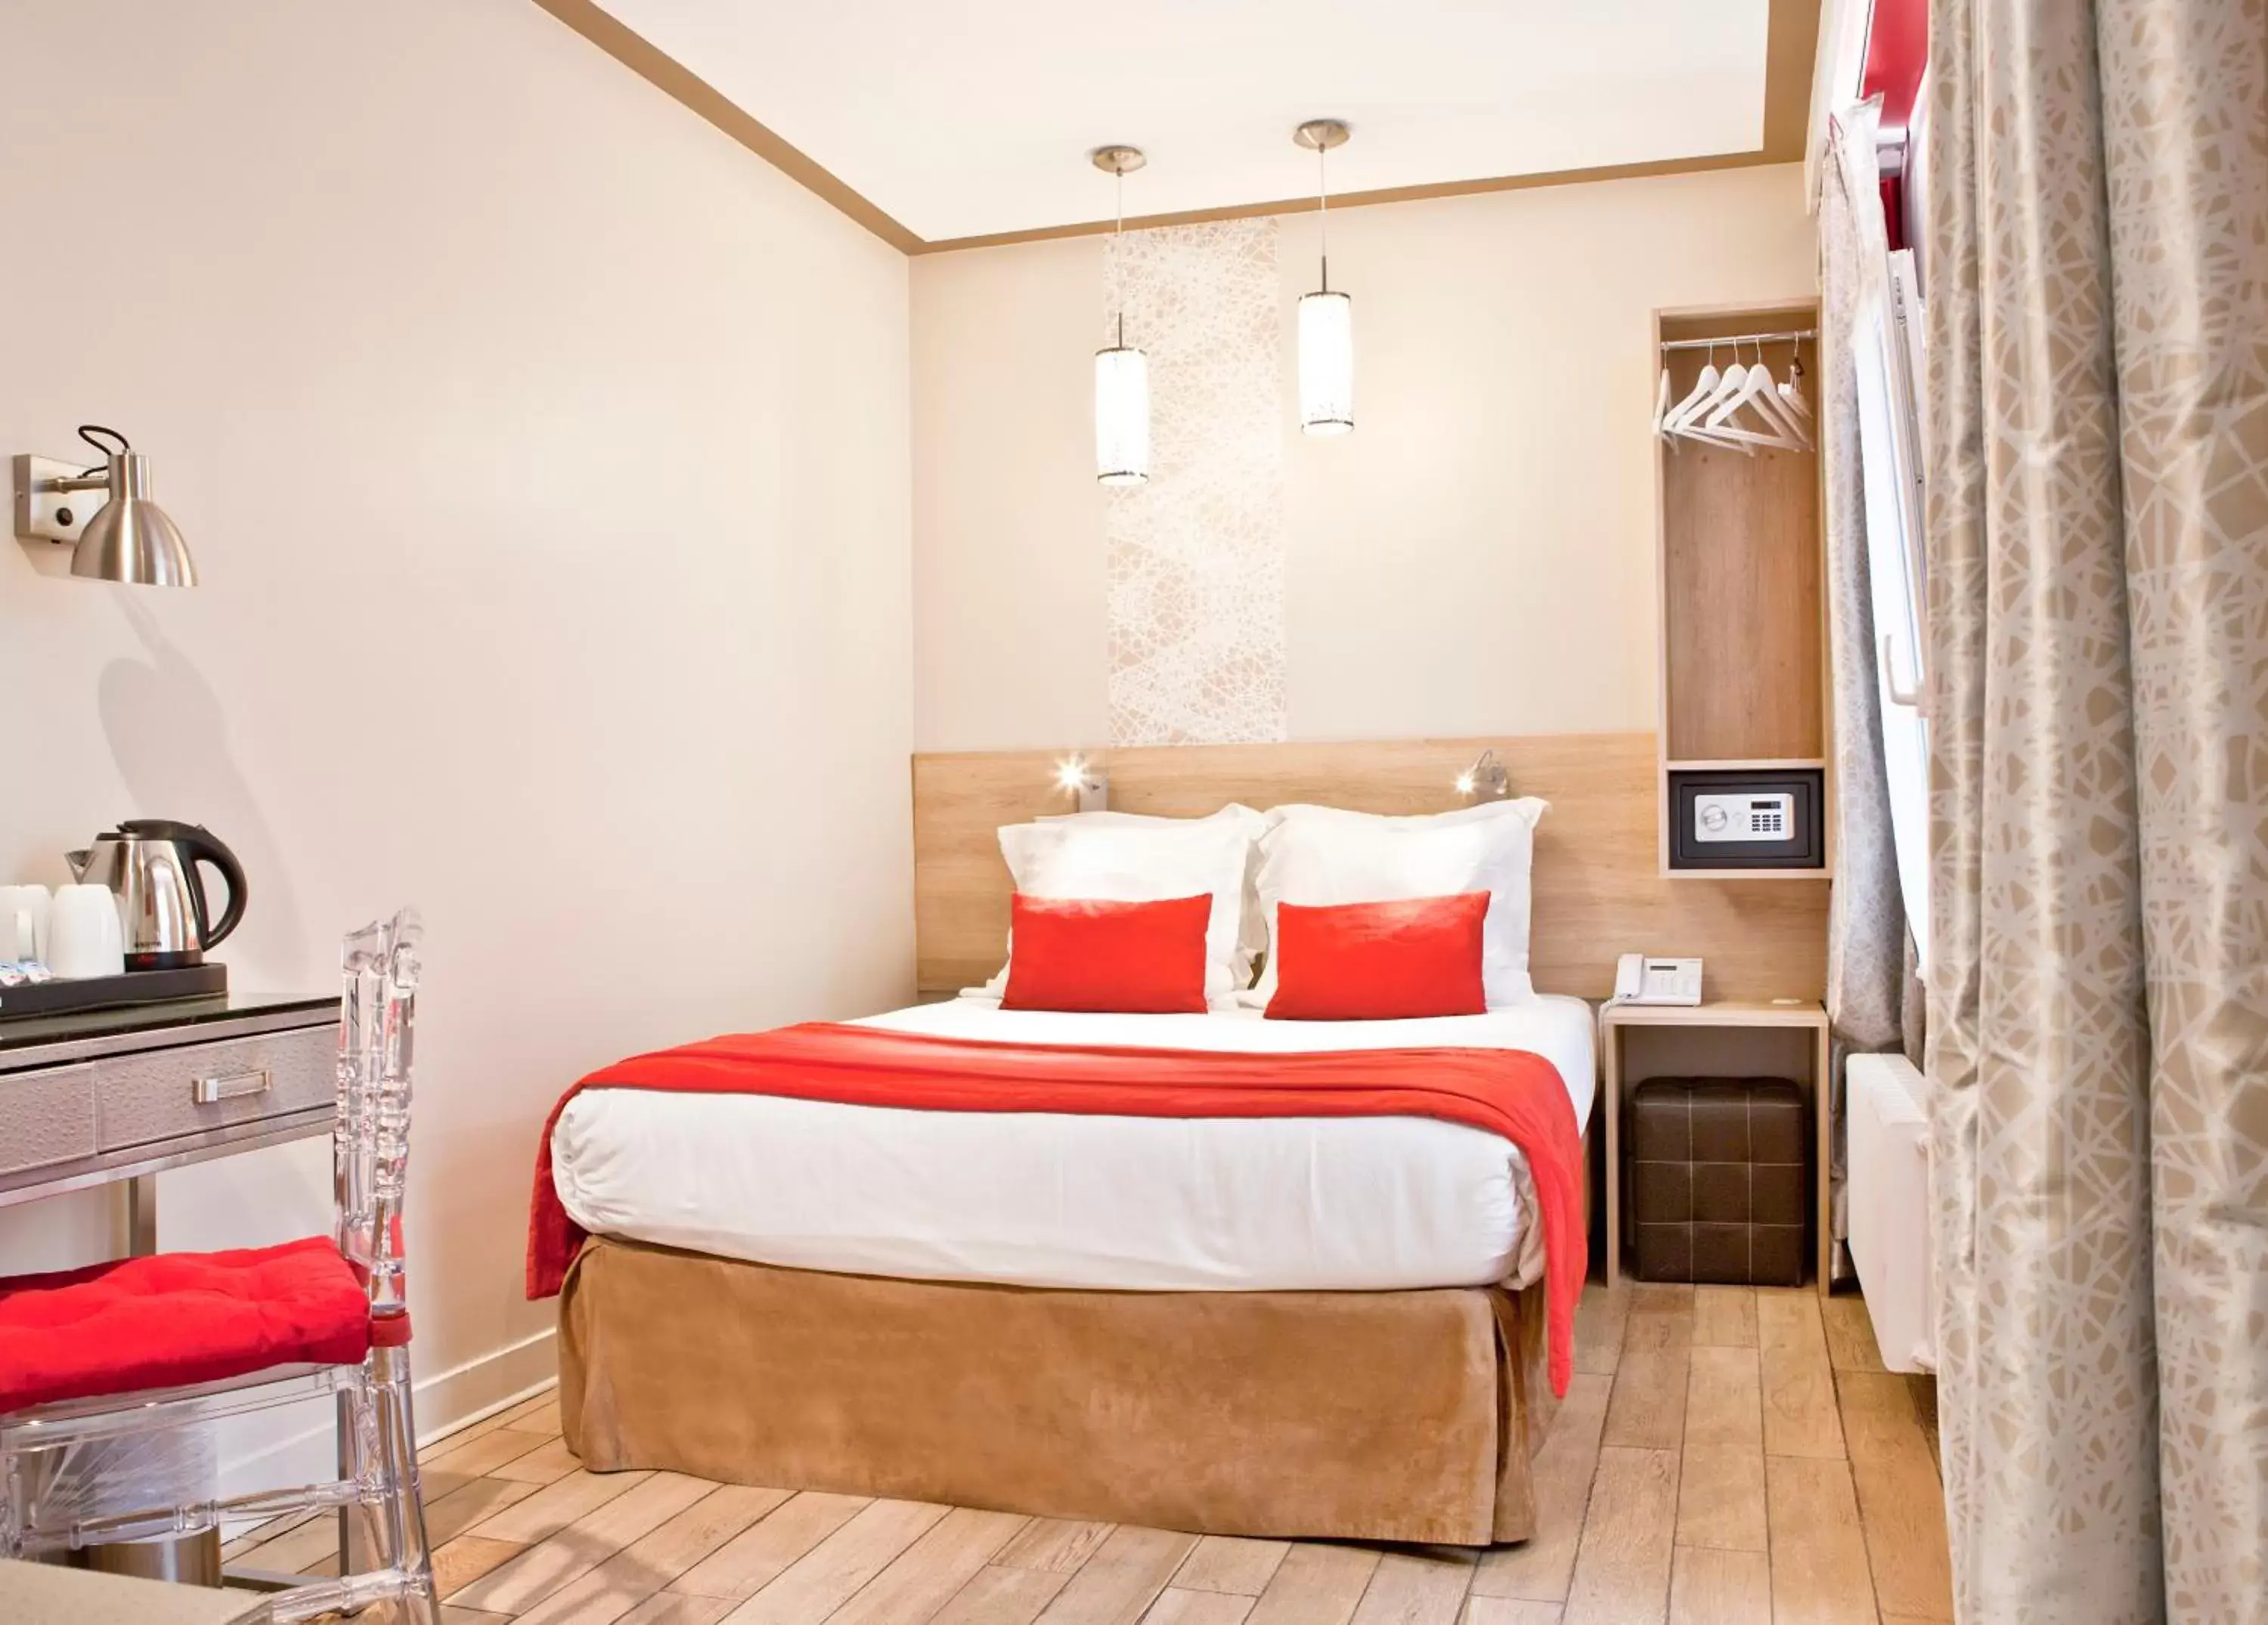 Bed, Room Photo in Hotel Eiffel Segur